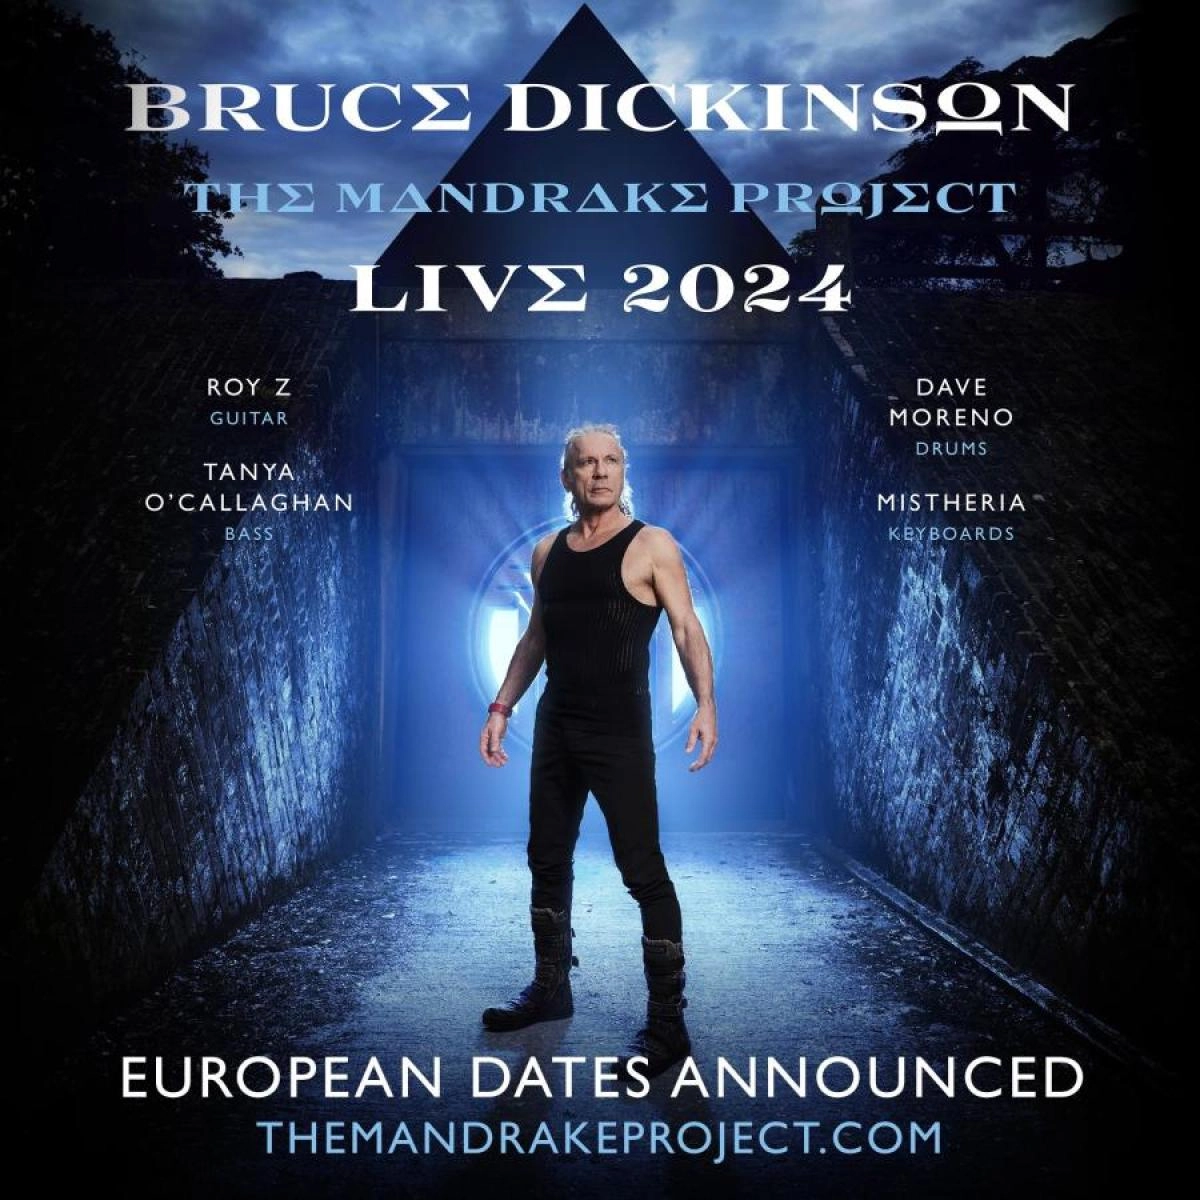 Bruce Dickinson - The Mandrake Project Live 2024 en Maimarkt Mannheim Tickets